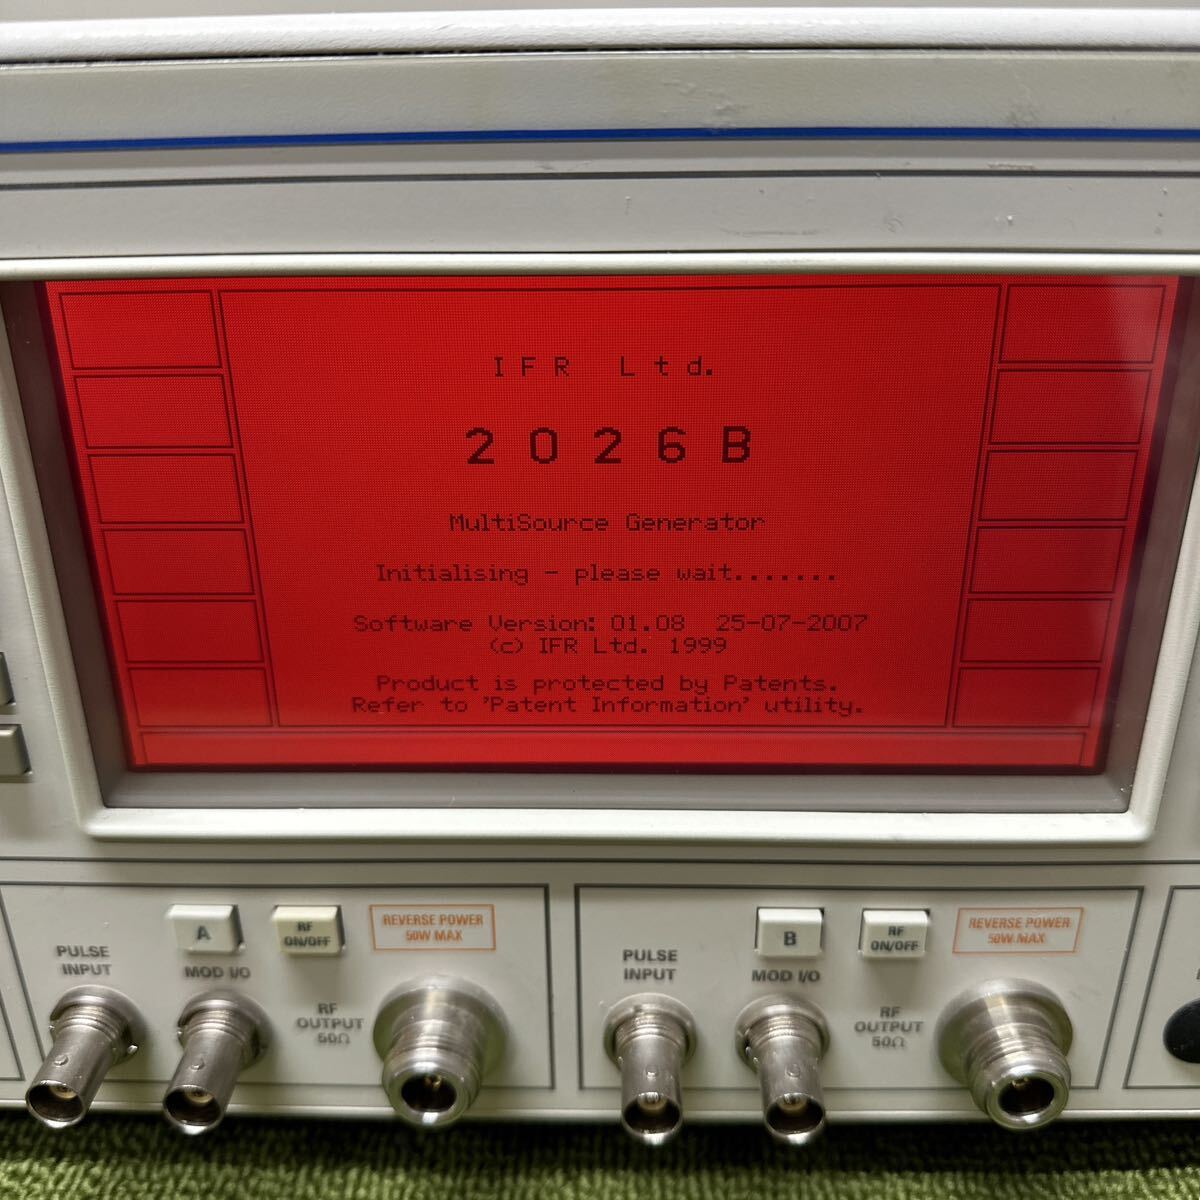 IFR「2026B」Multisource Generator 10kHz-2.51GHz の画像2